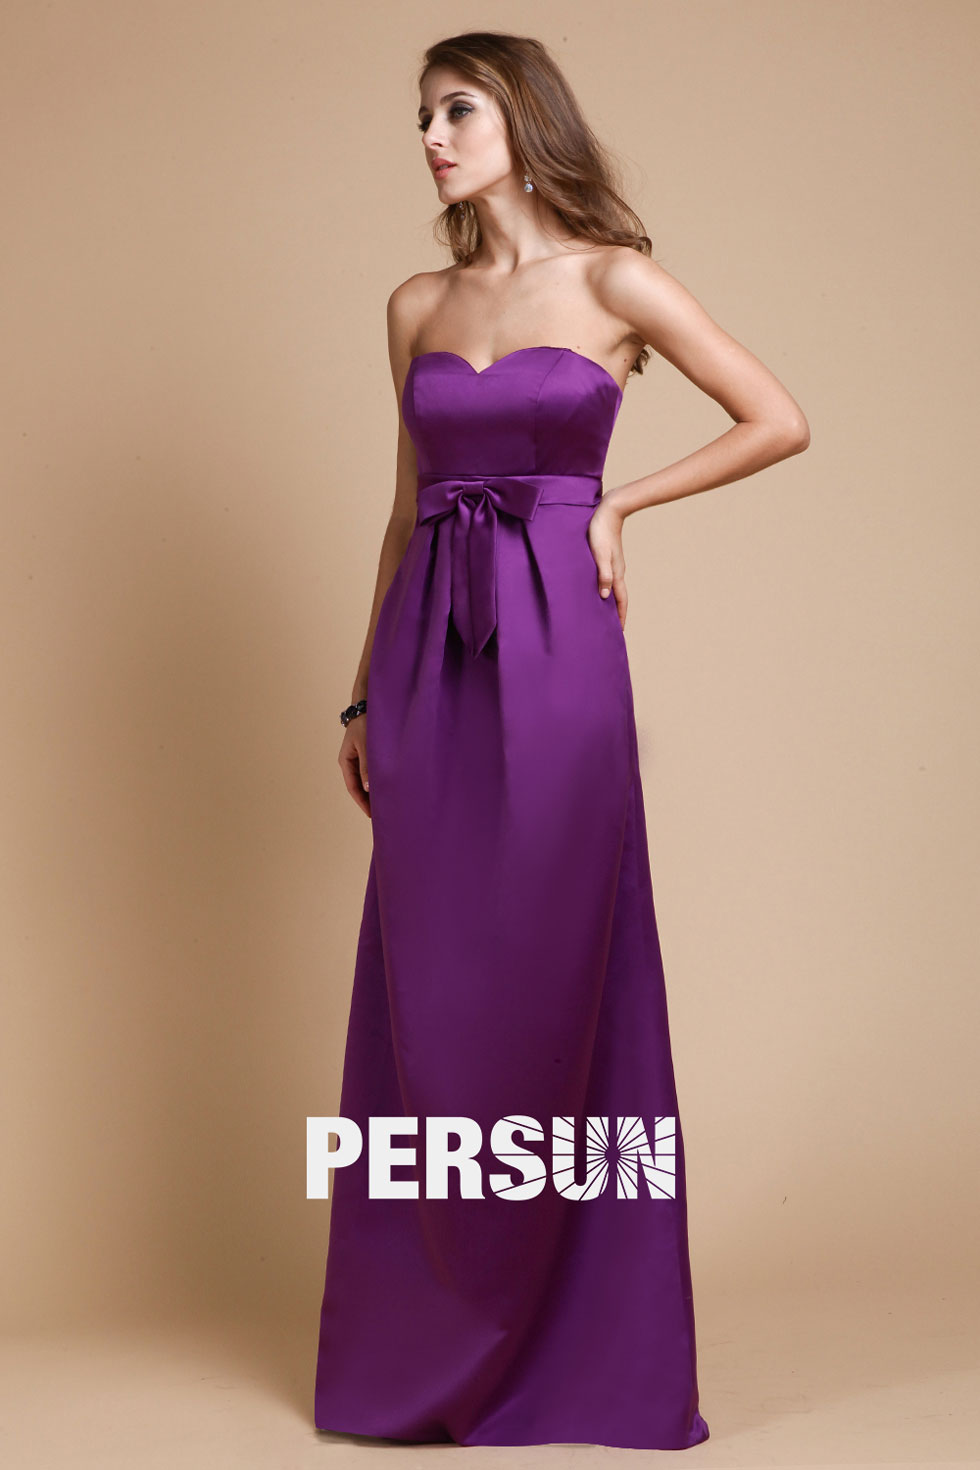 Satin Sweetheart Bow Sash A line Purple Formal Bridesmaid Dress